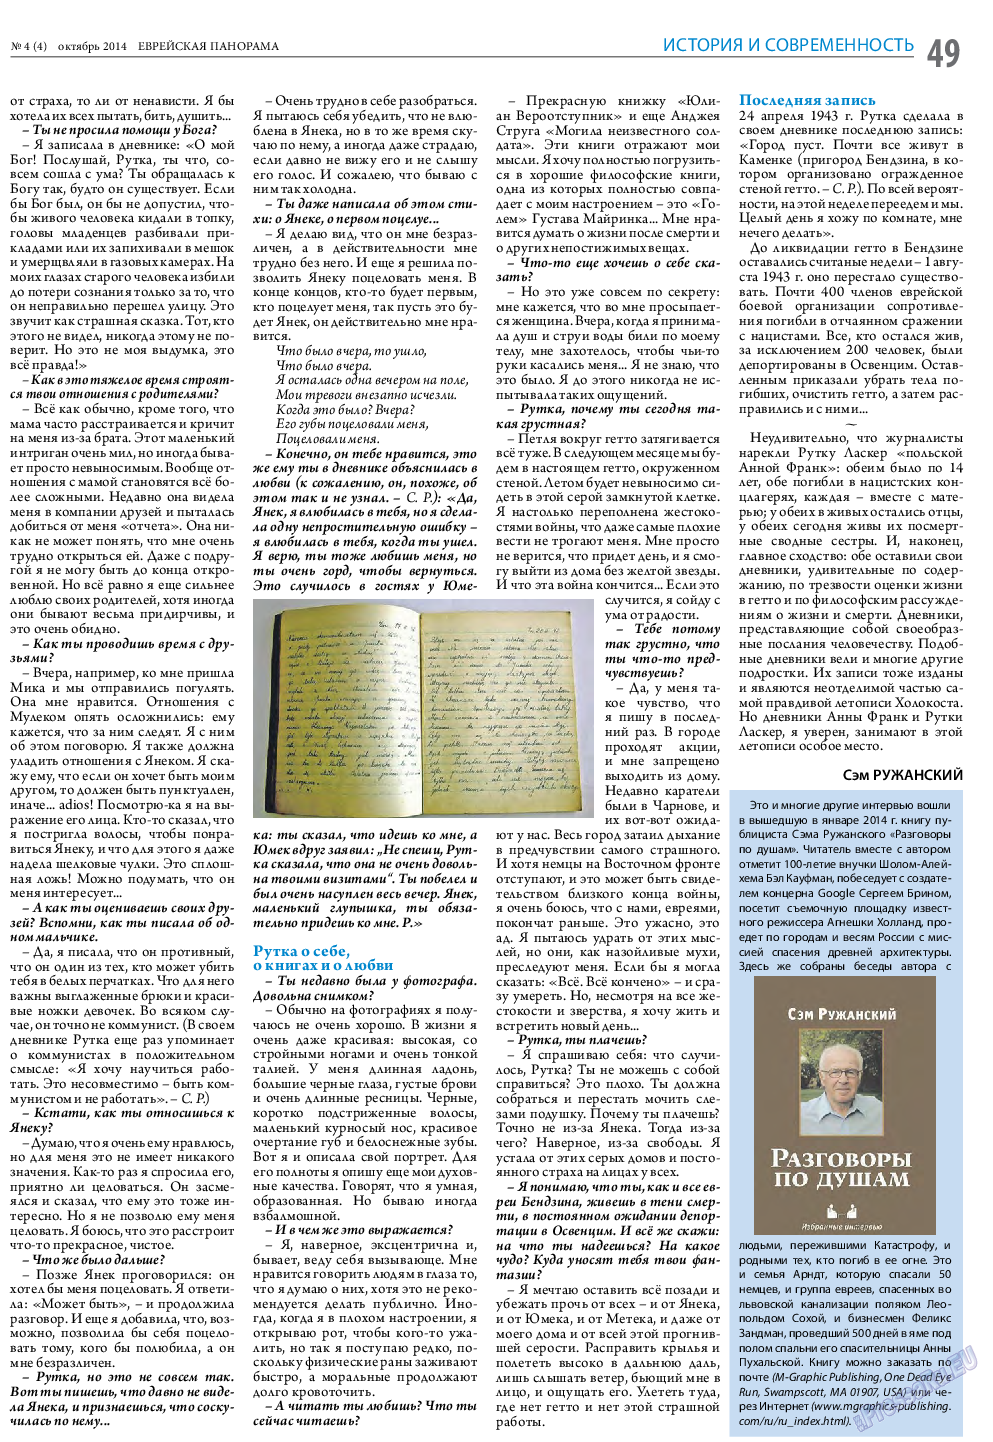 Еврейская панорама, газета. 2014 №4 стр.49